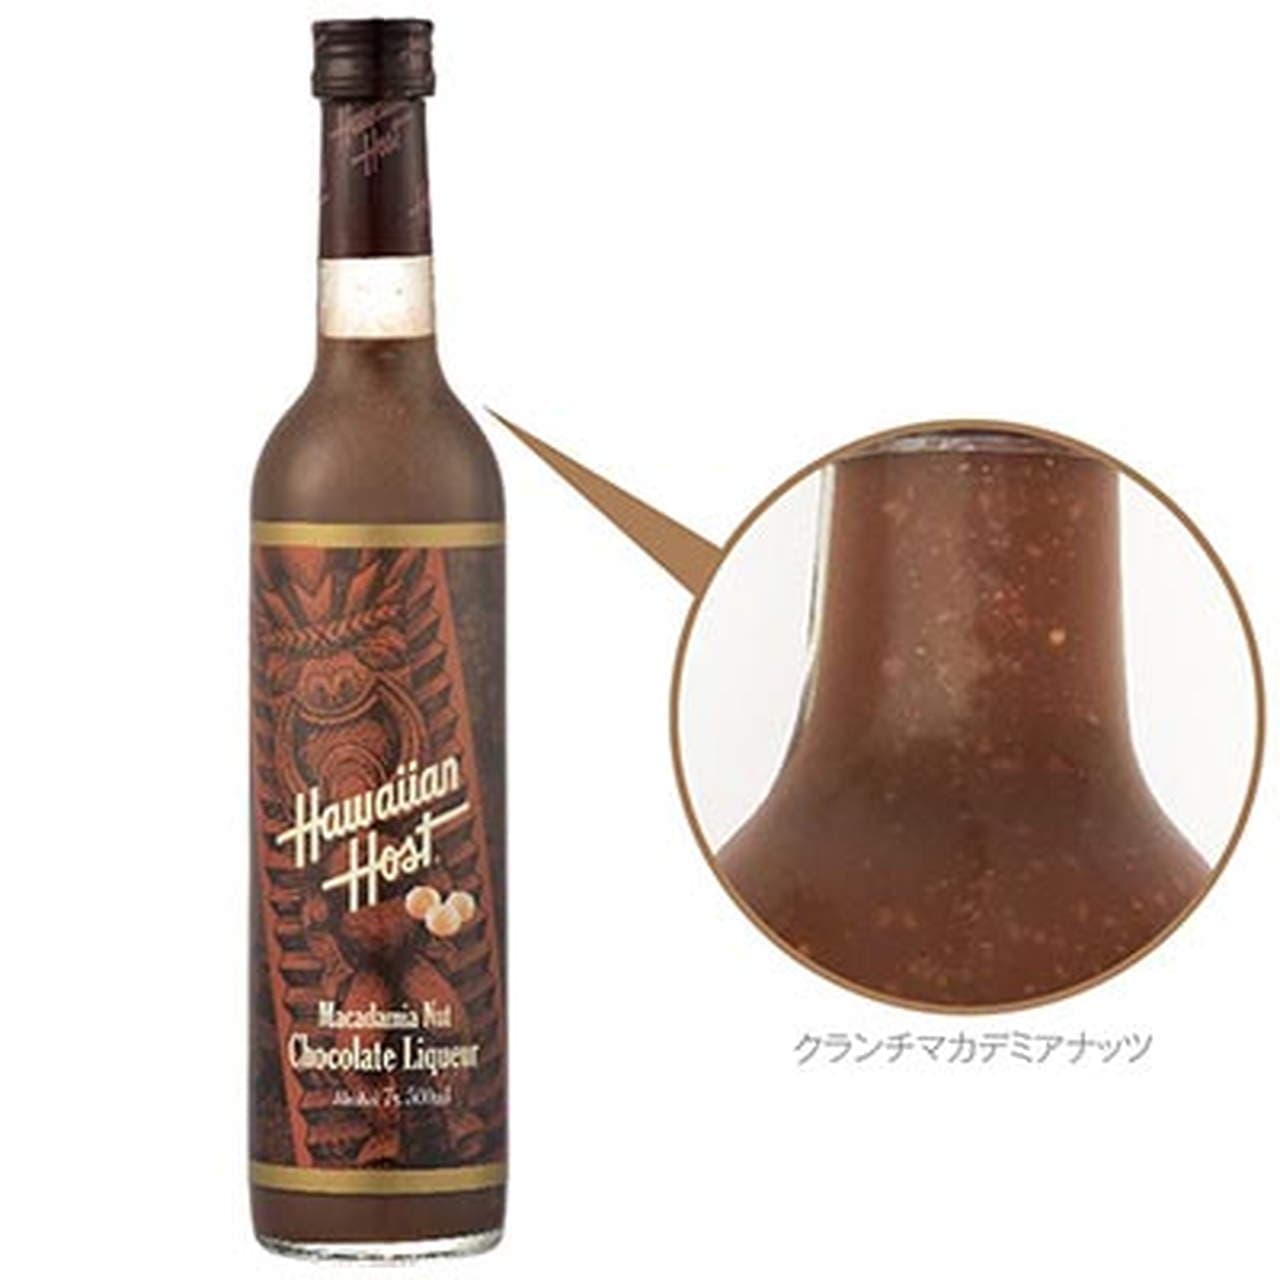 "Macademia nut chocolate liqueur" supervised by Hawaiian Horst